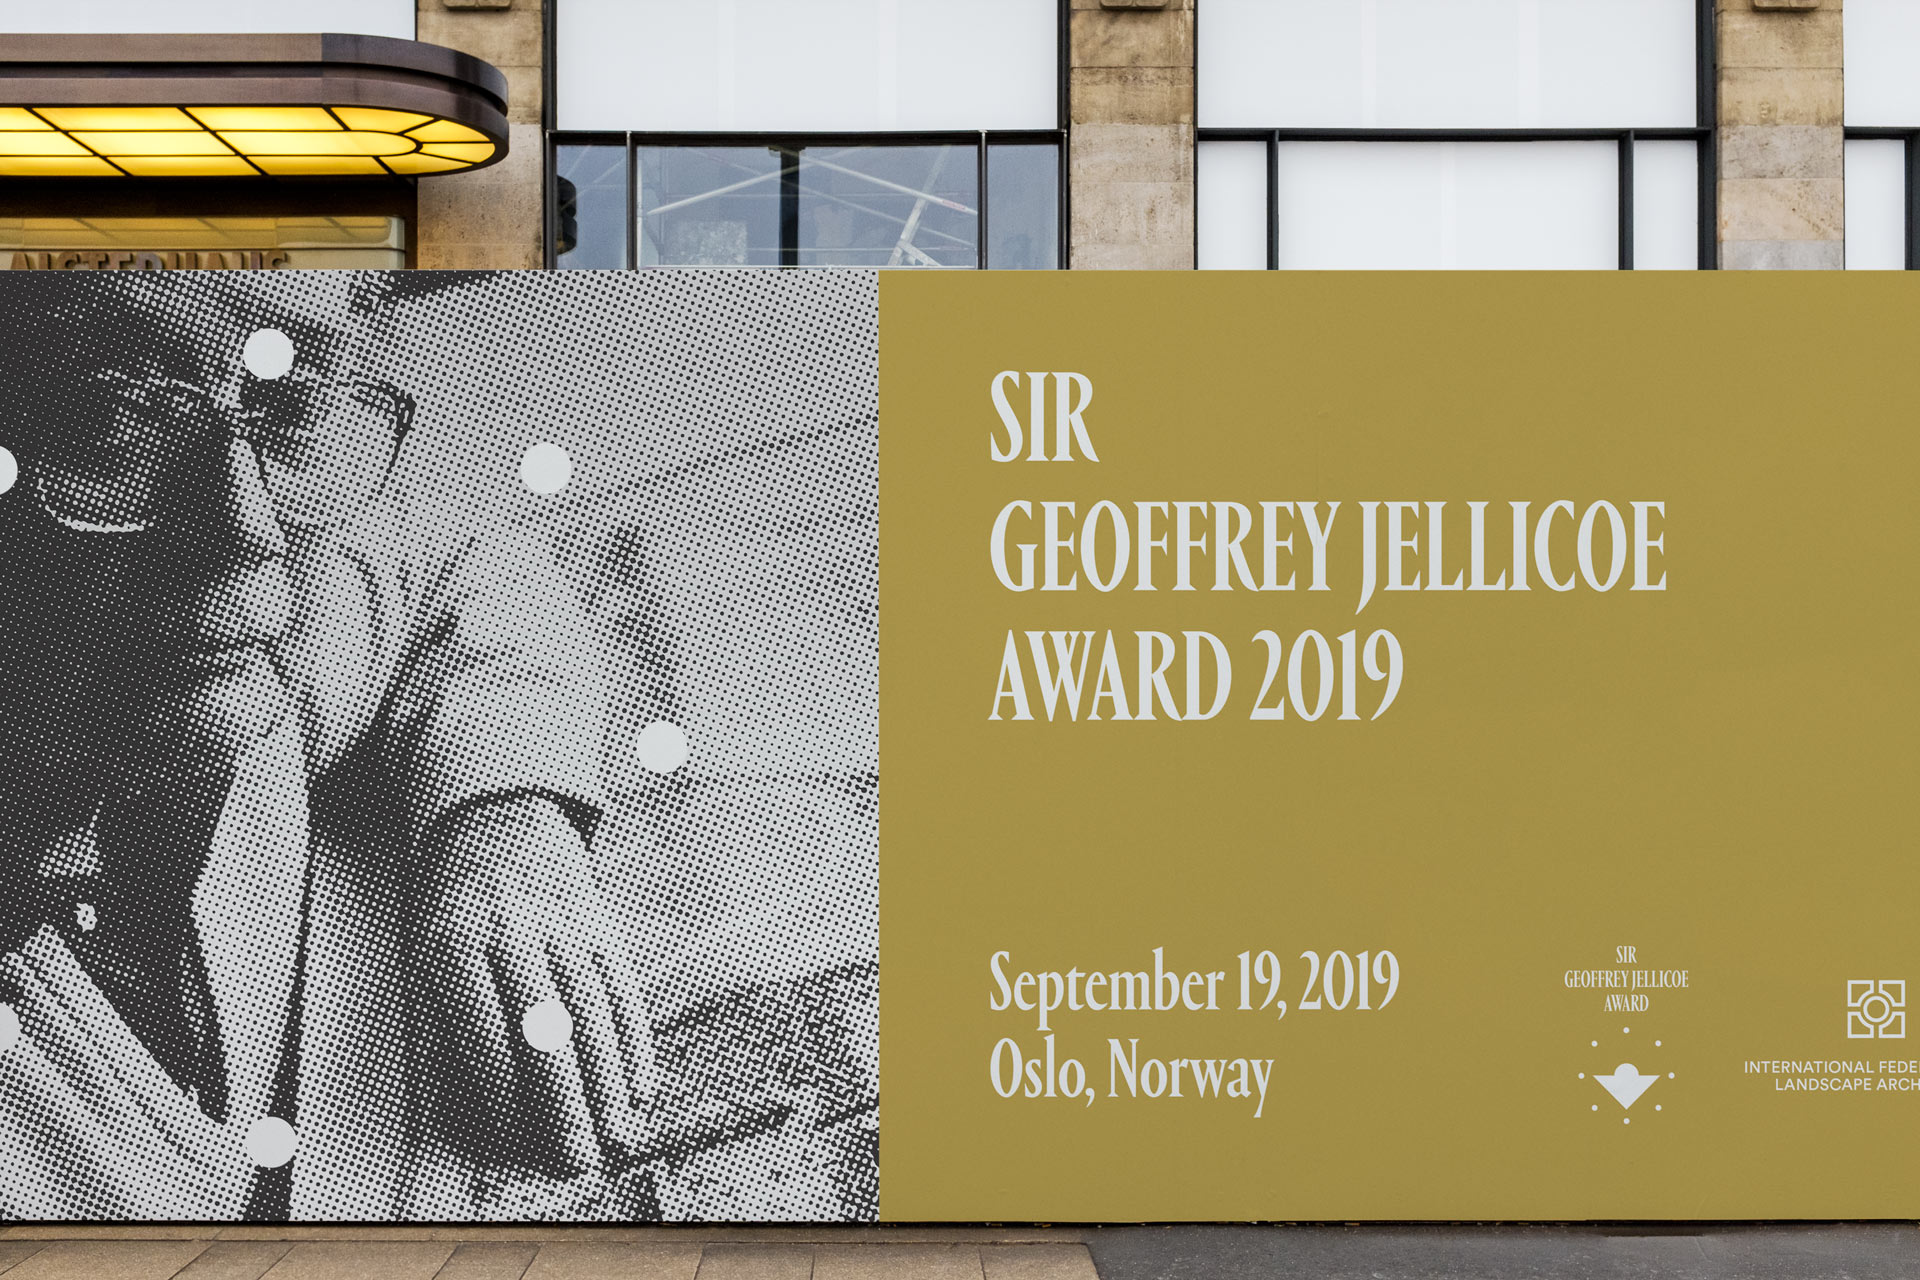 The IFLA Sir Geoffrey Jellicoe Award